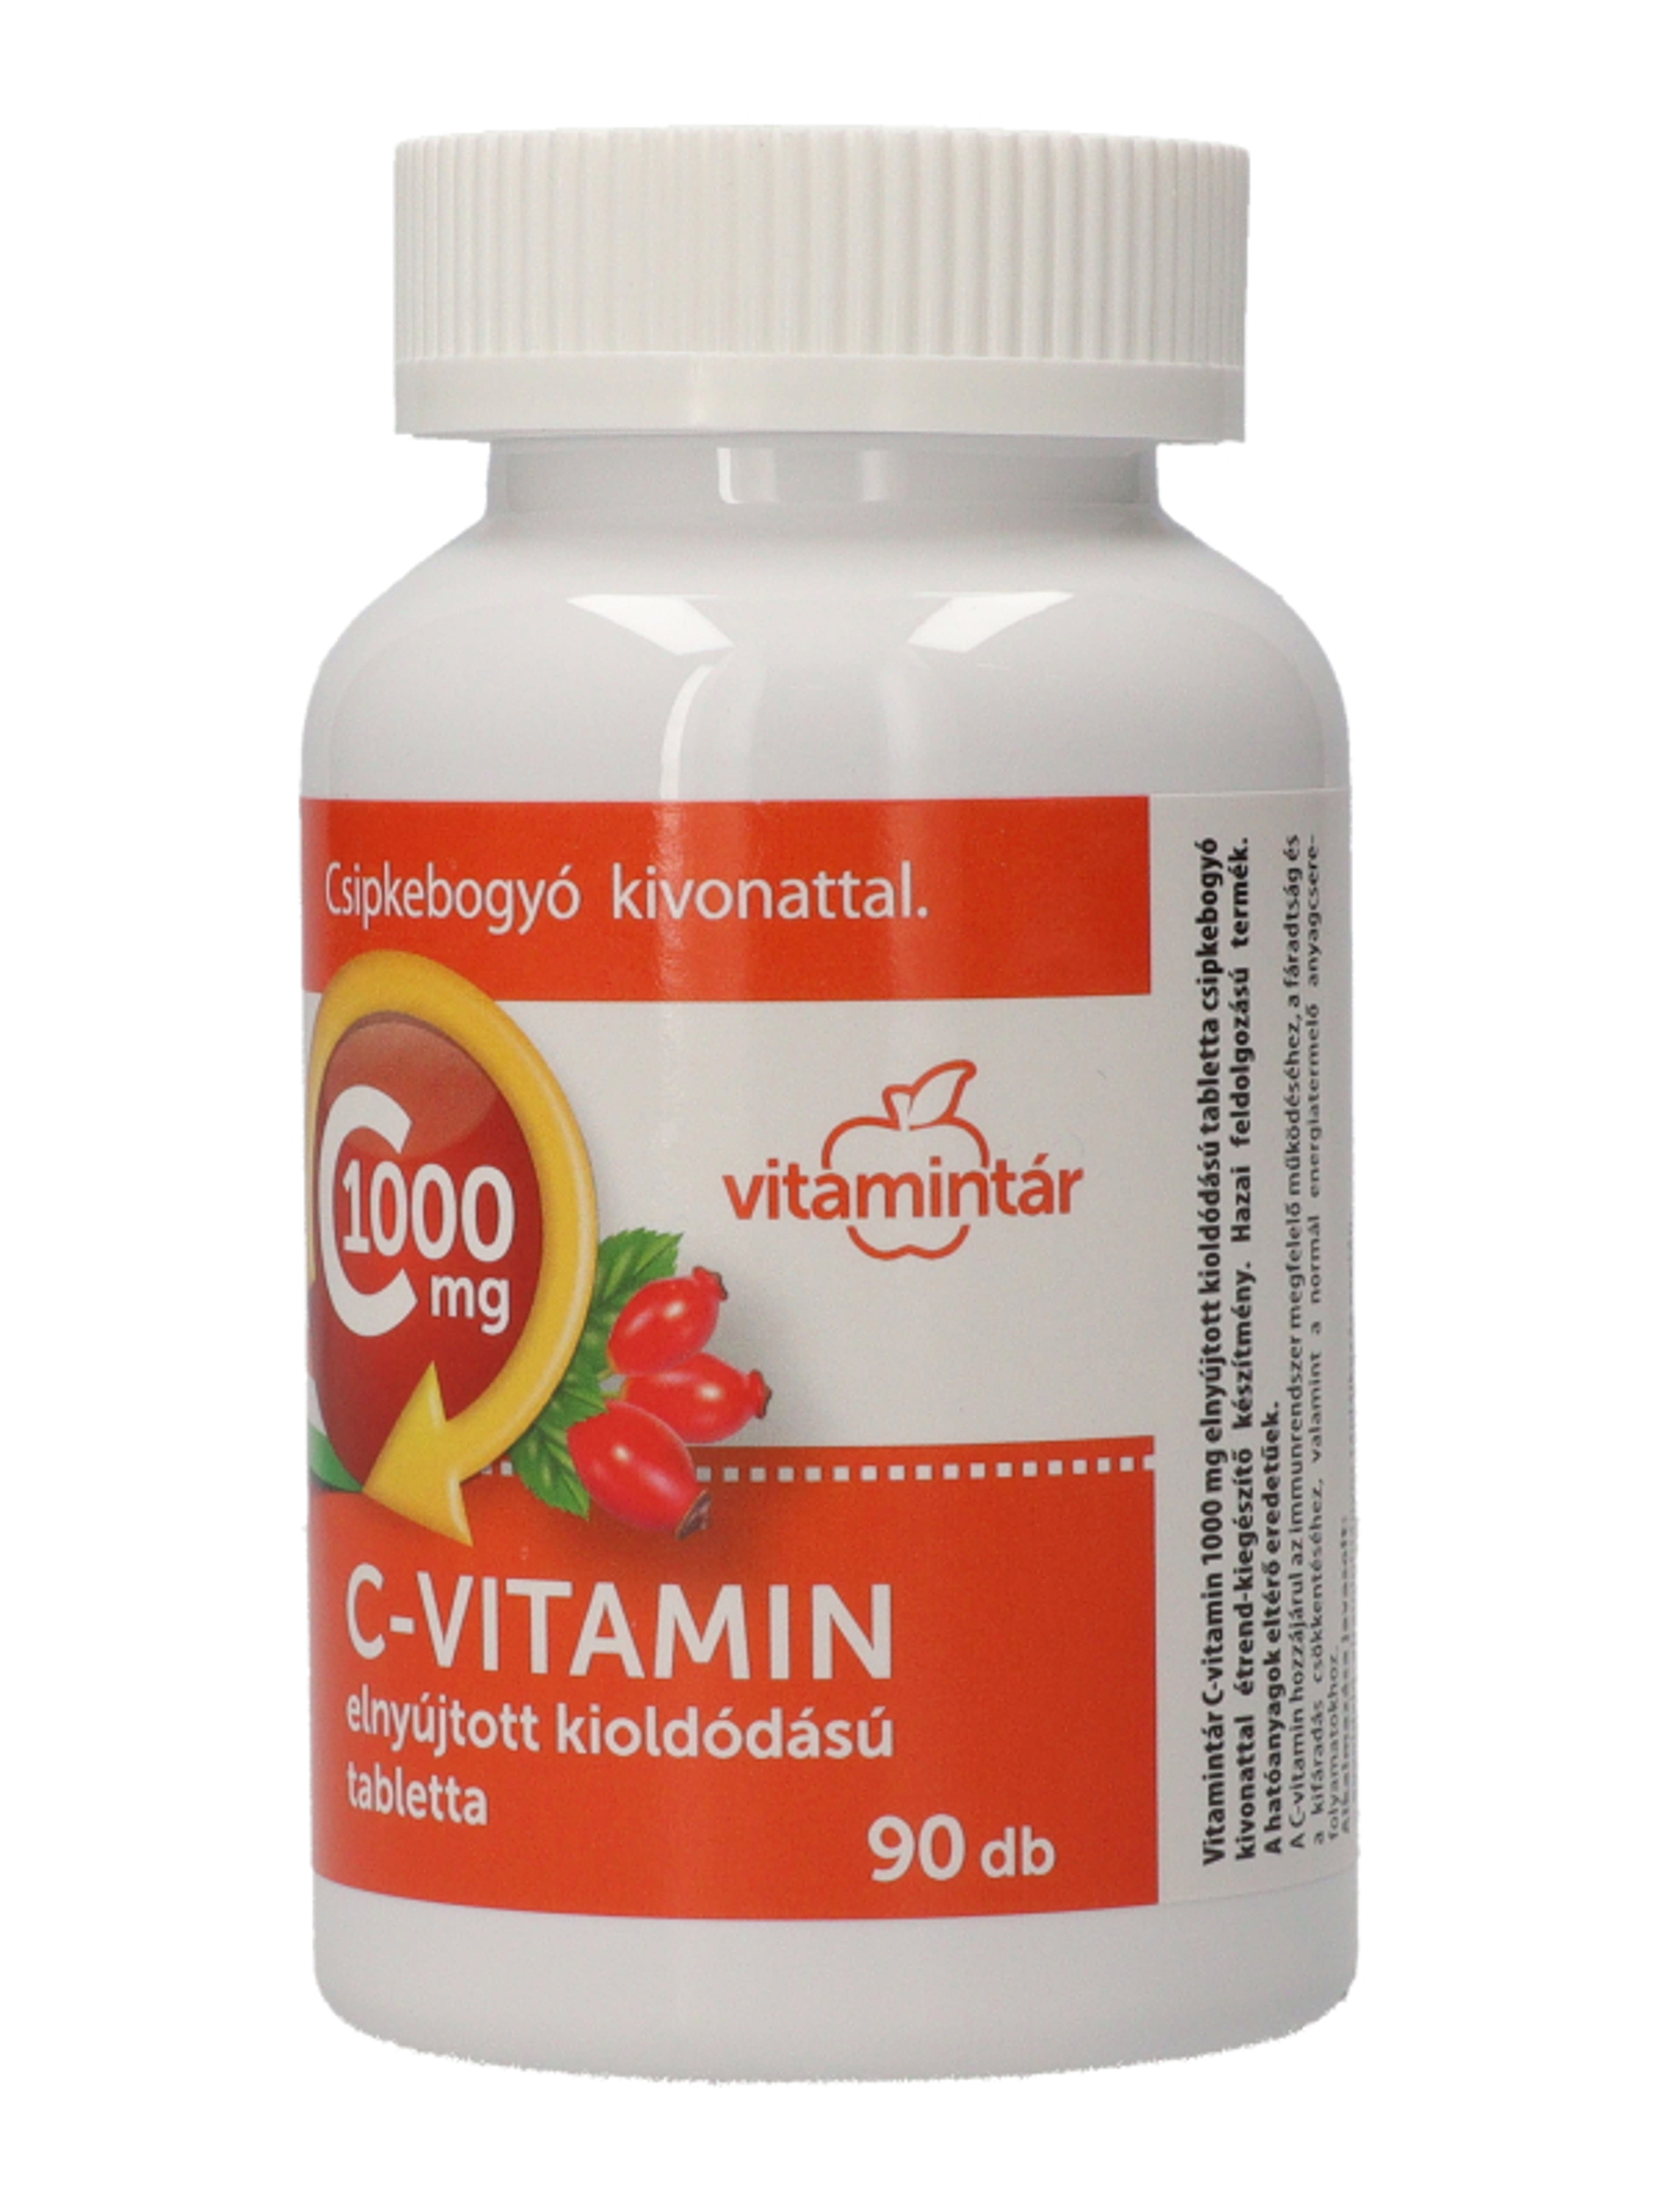 Vitamintár C-Vitamin Csipkebogyó Kivonattal 1000mg Tabletta - 90 db-3